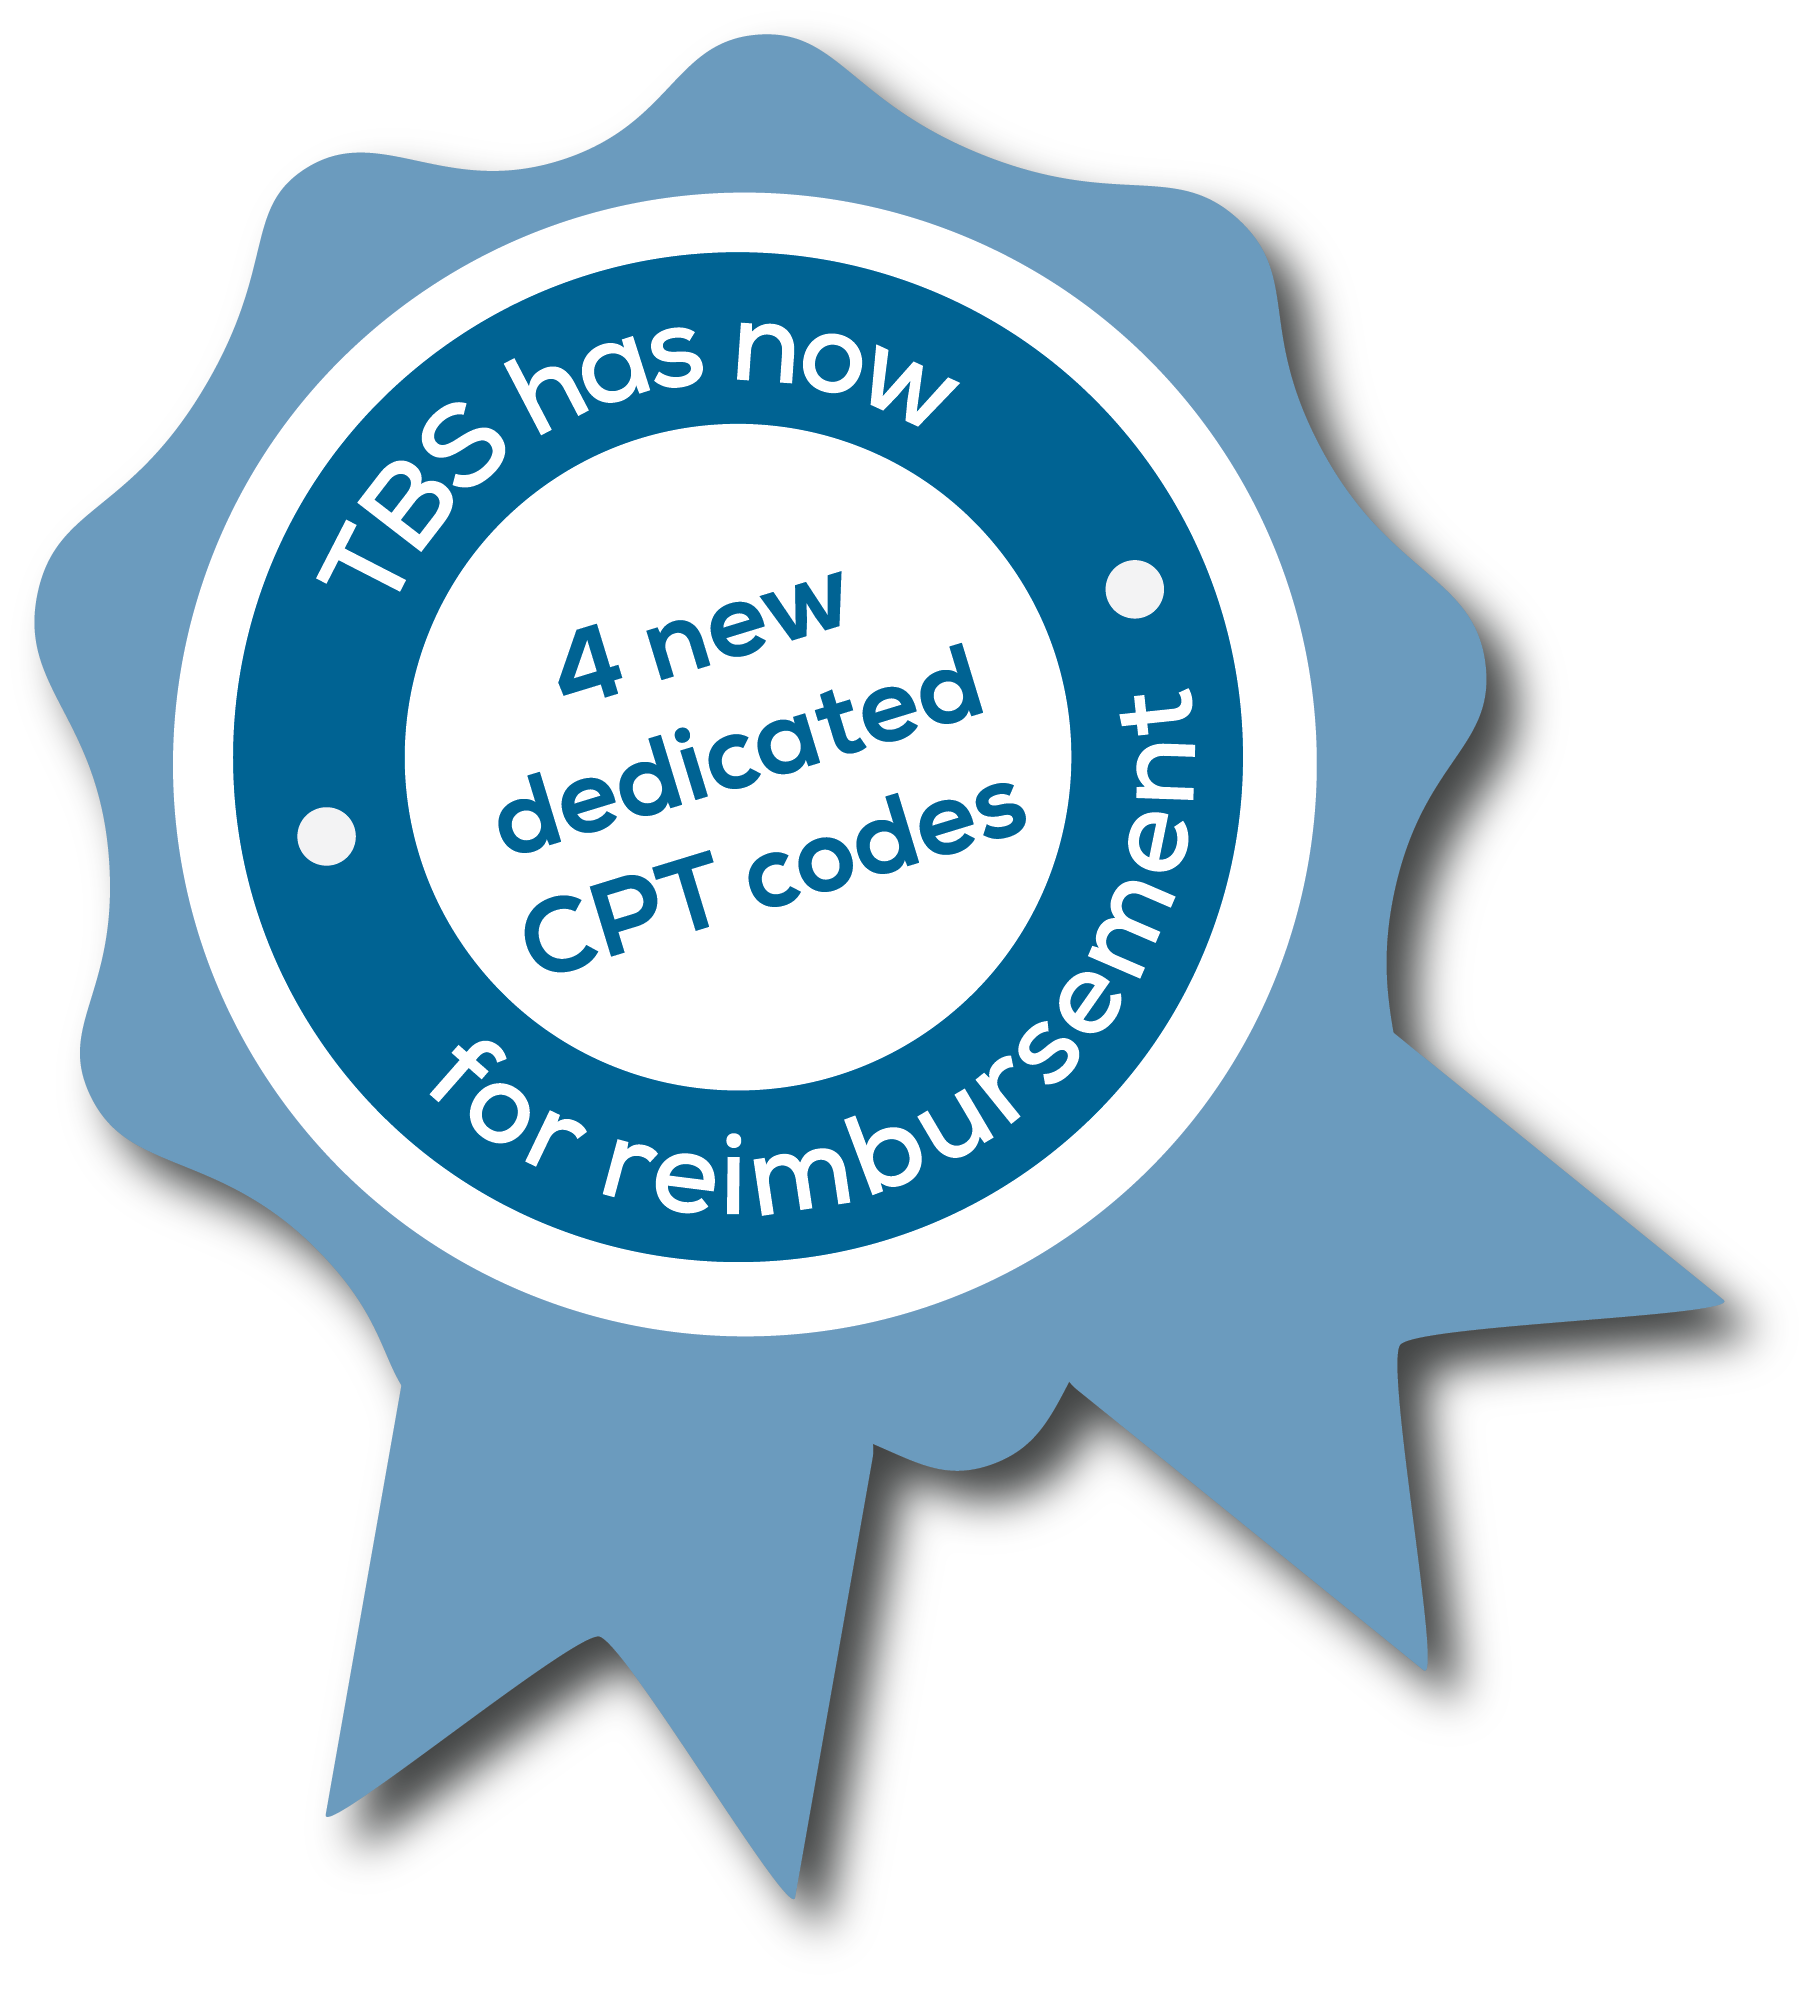 TBS has now 4 new dedicated CPT codes for reimbursement